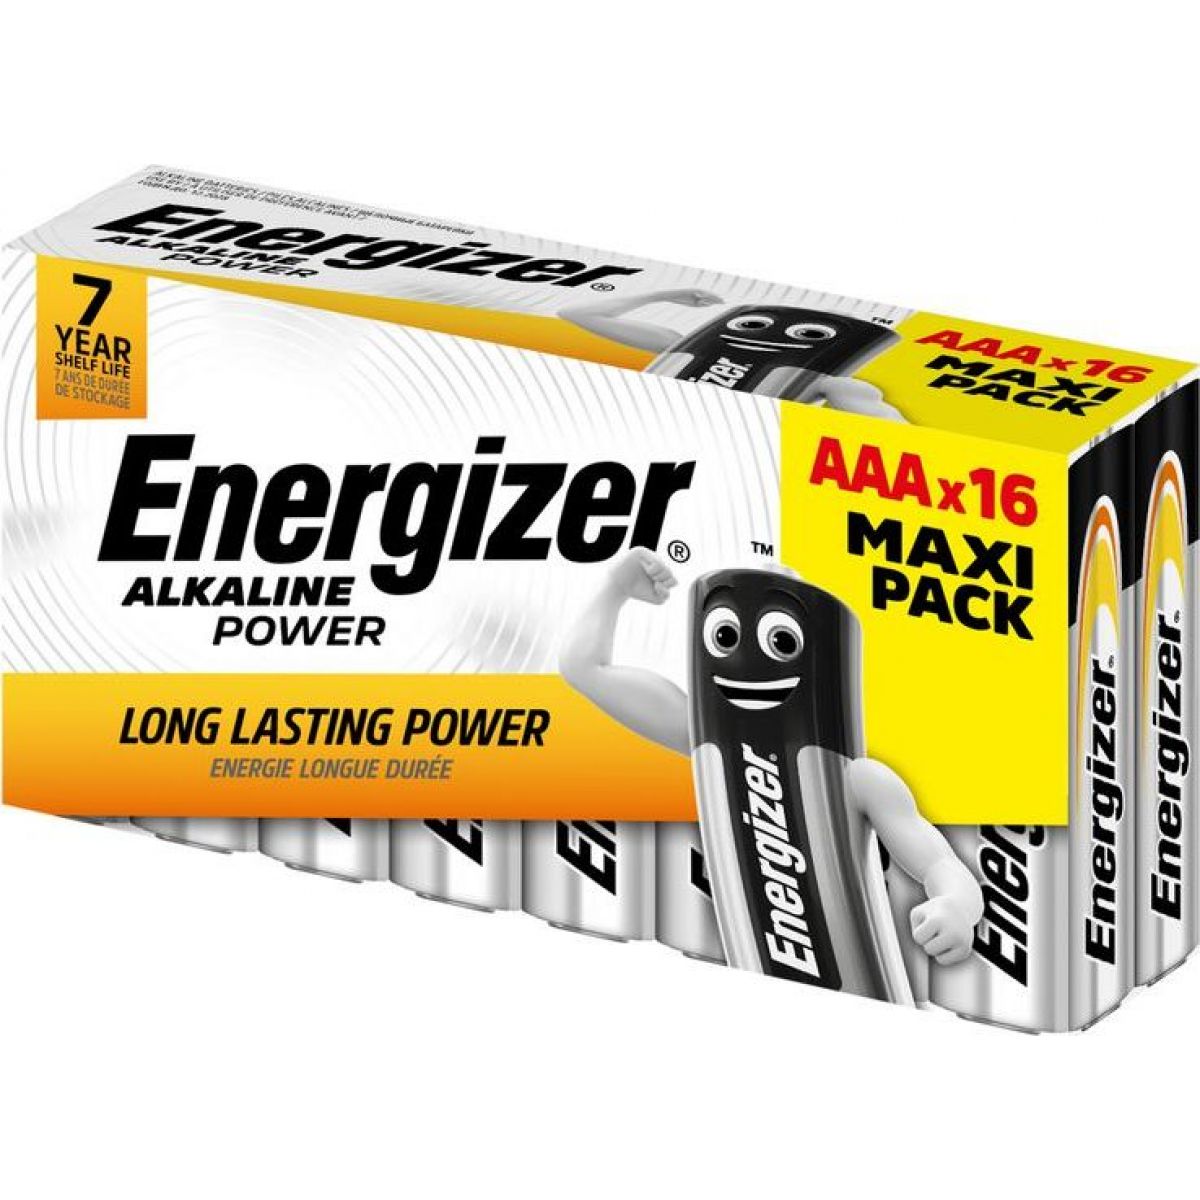 Energizer Alkaline Power AAA 16pack